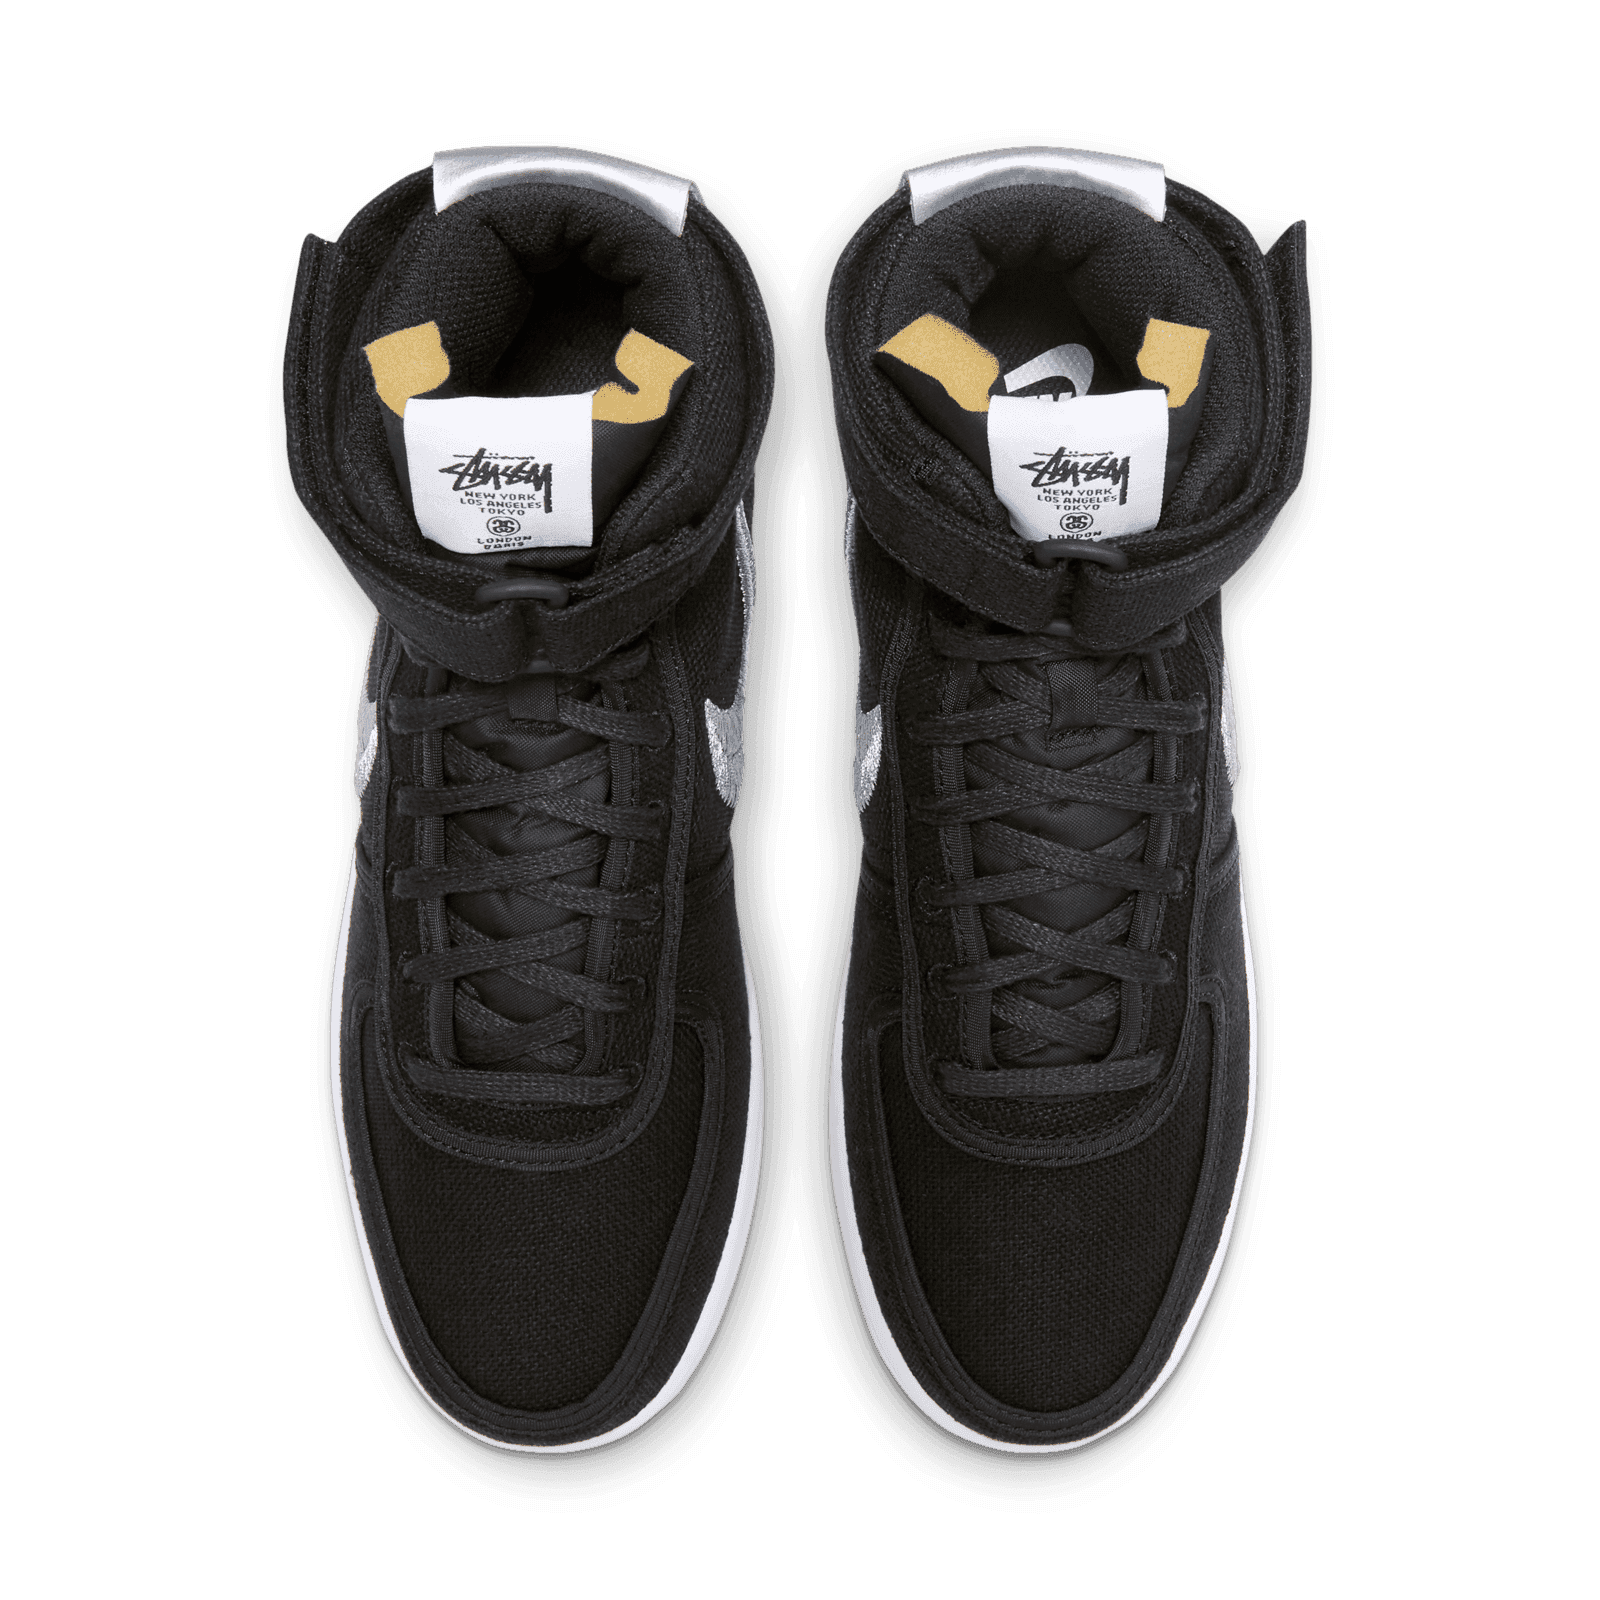 Nike Vandal High Stussy Black - DX5425-001 Raffles and Release Date